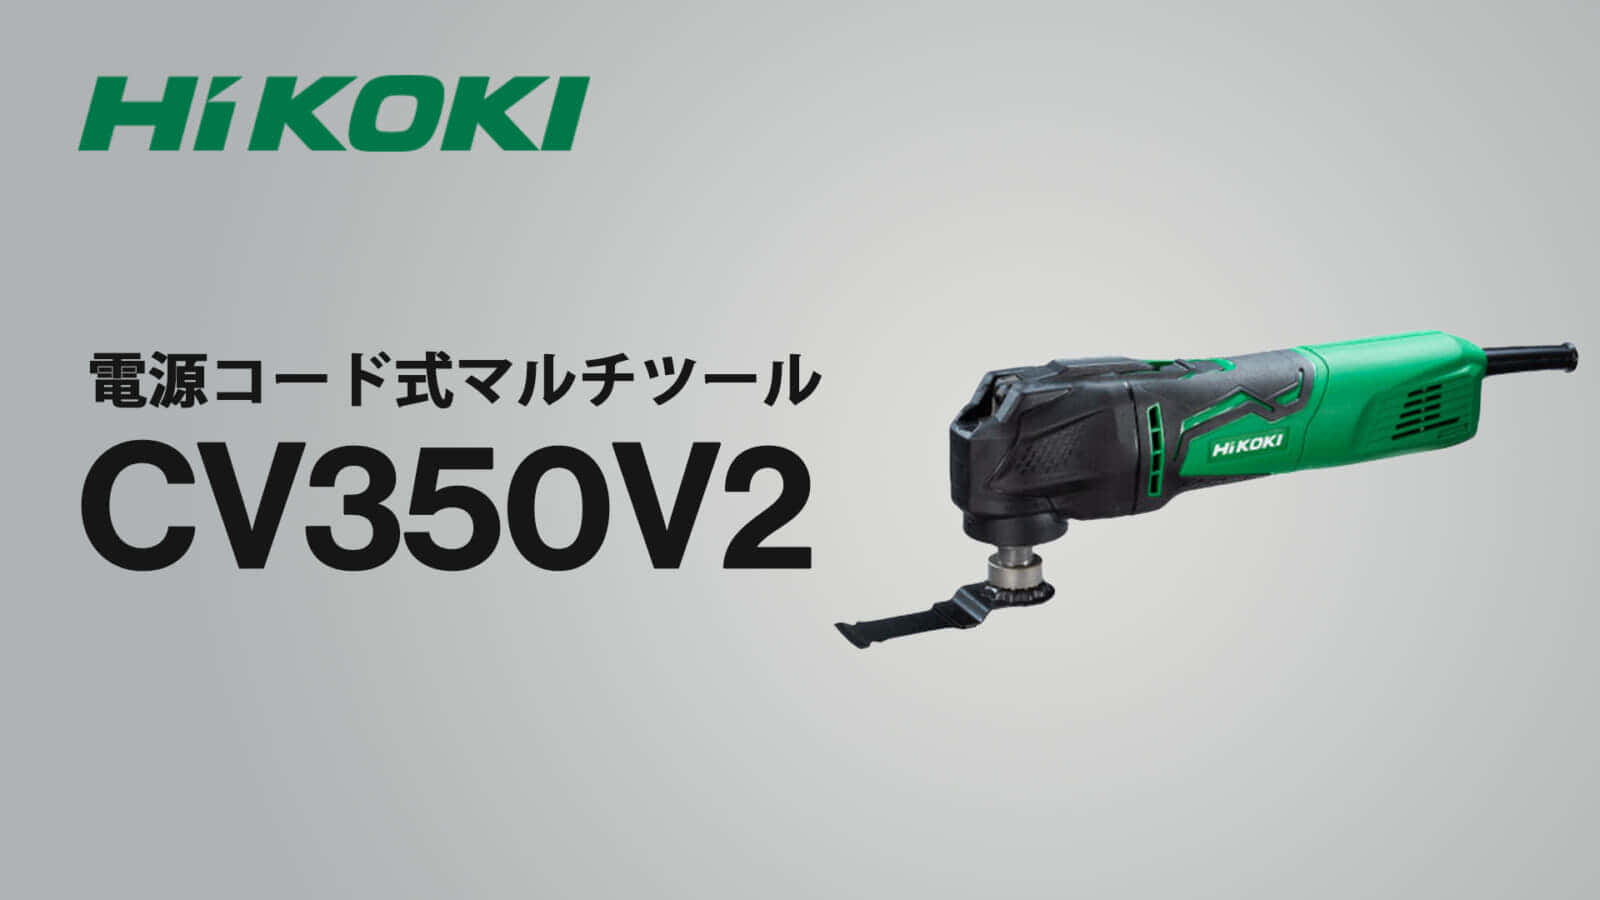 HiKOKI CV350V2 マルチツールを発売、先端構造変更のマイナーチェンジモデル